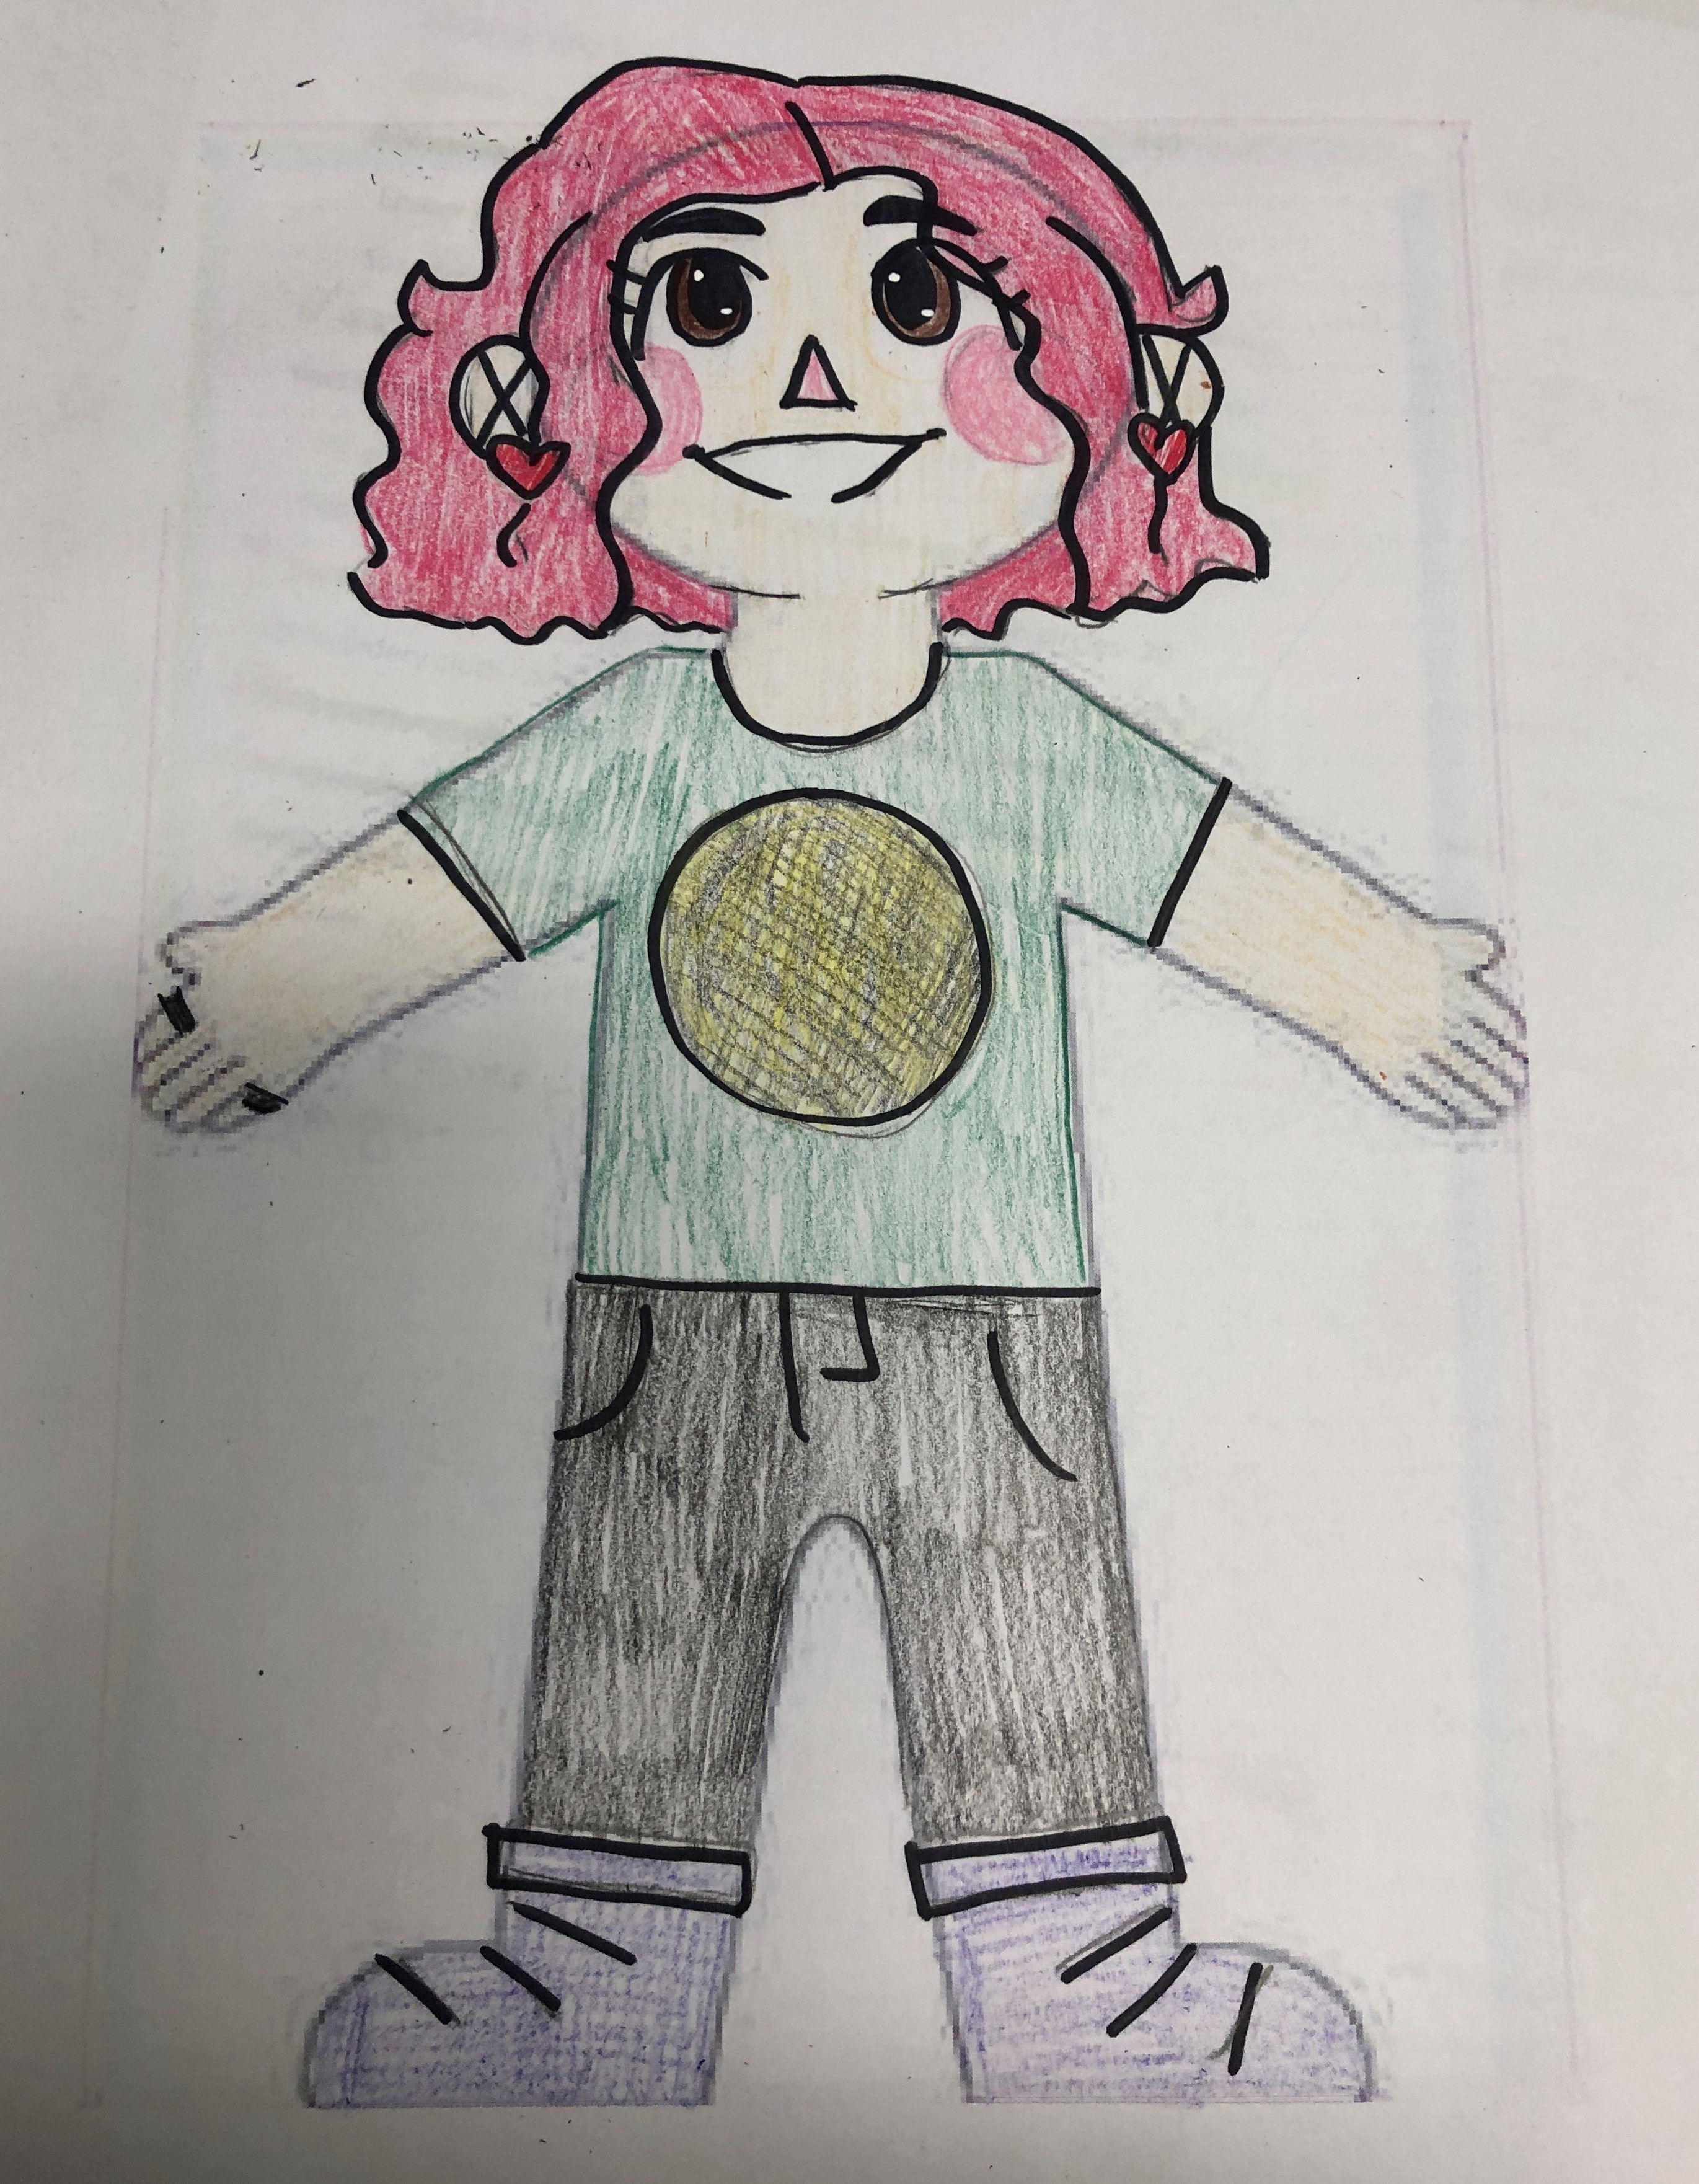 A cartoon girl with red hair